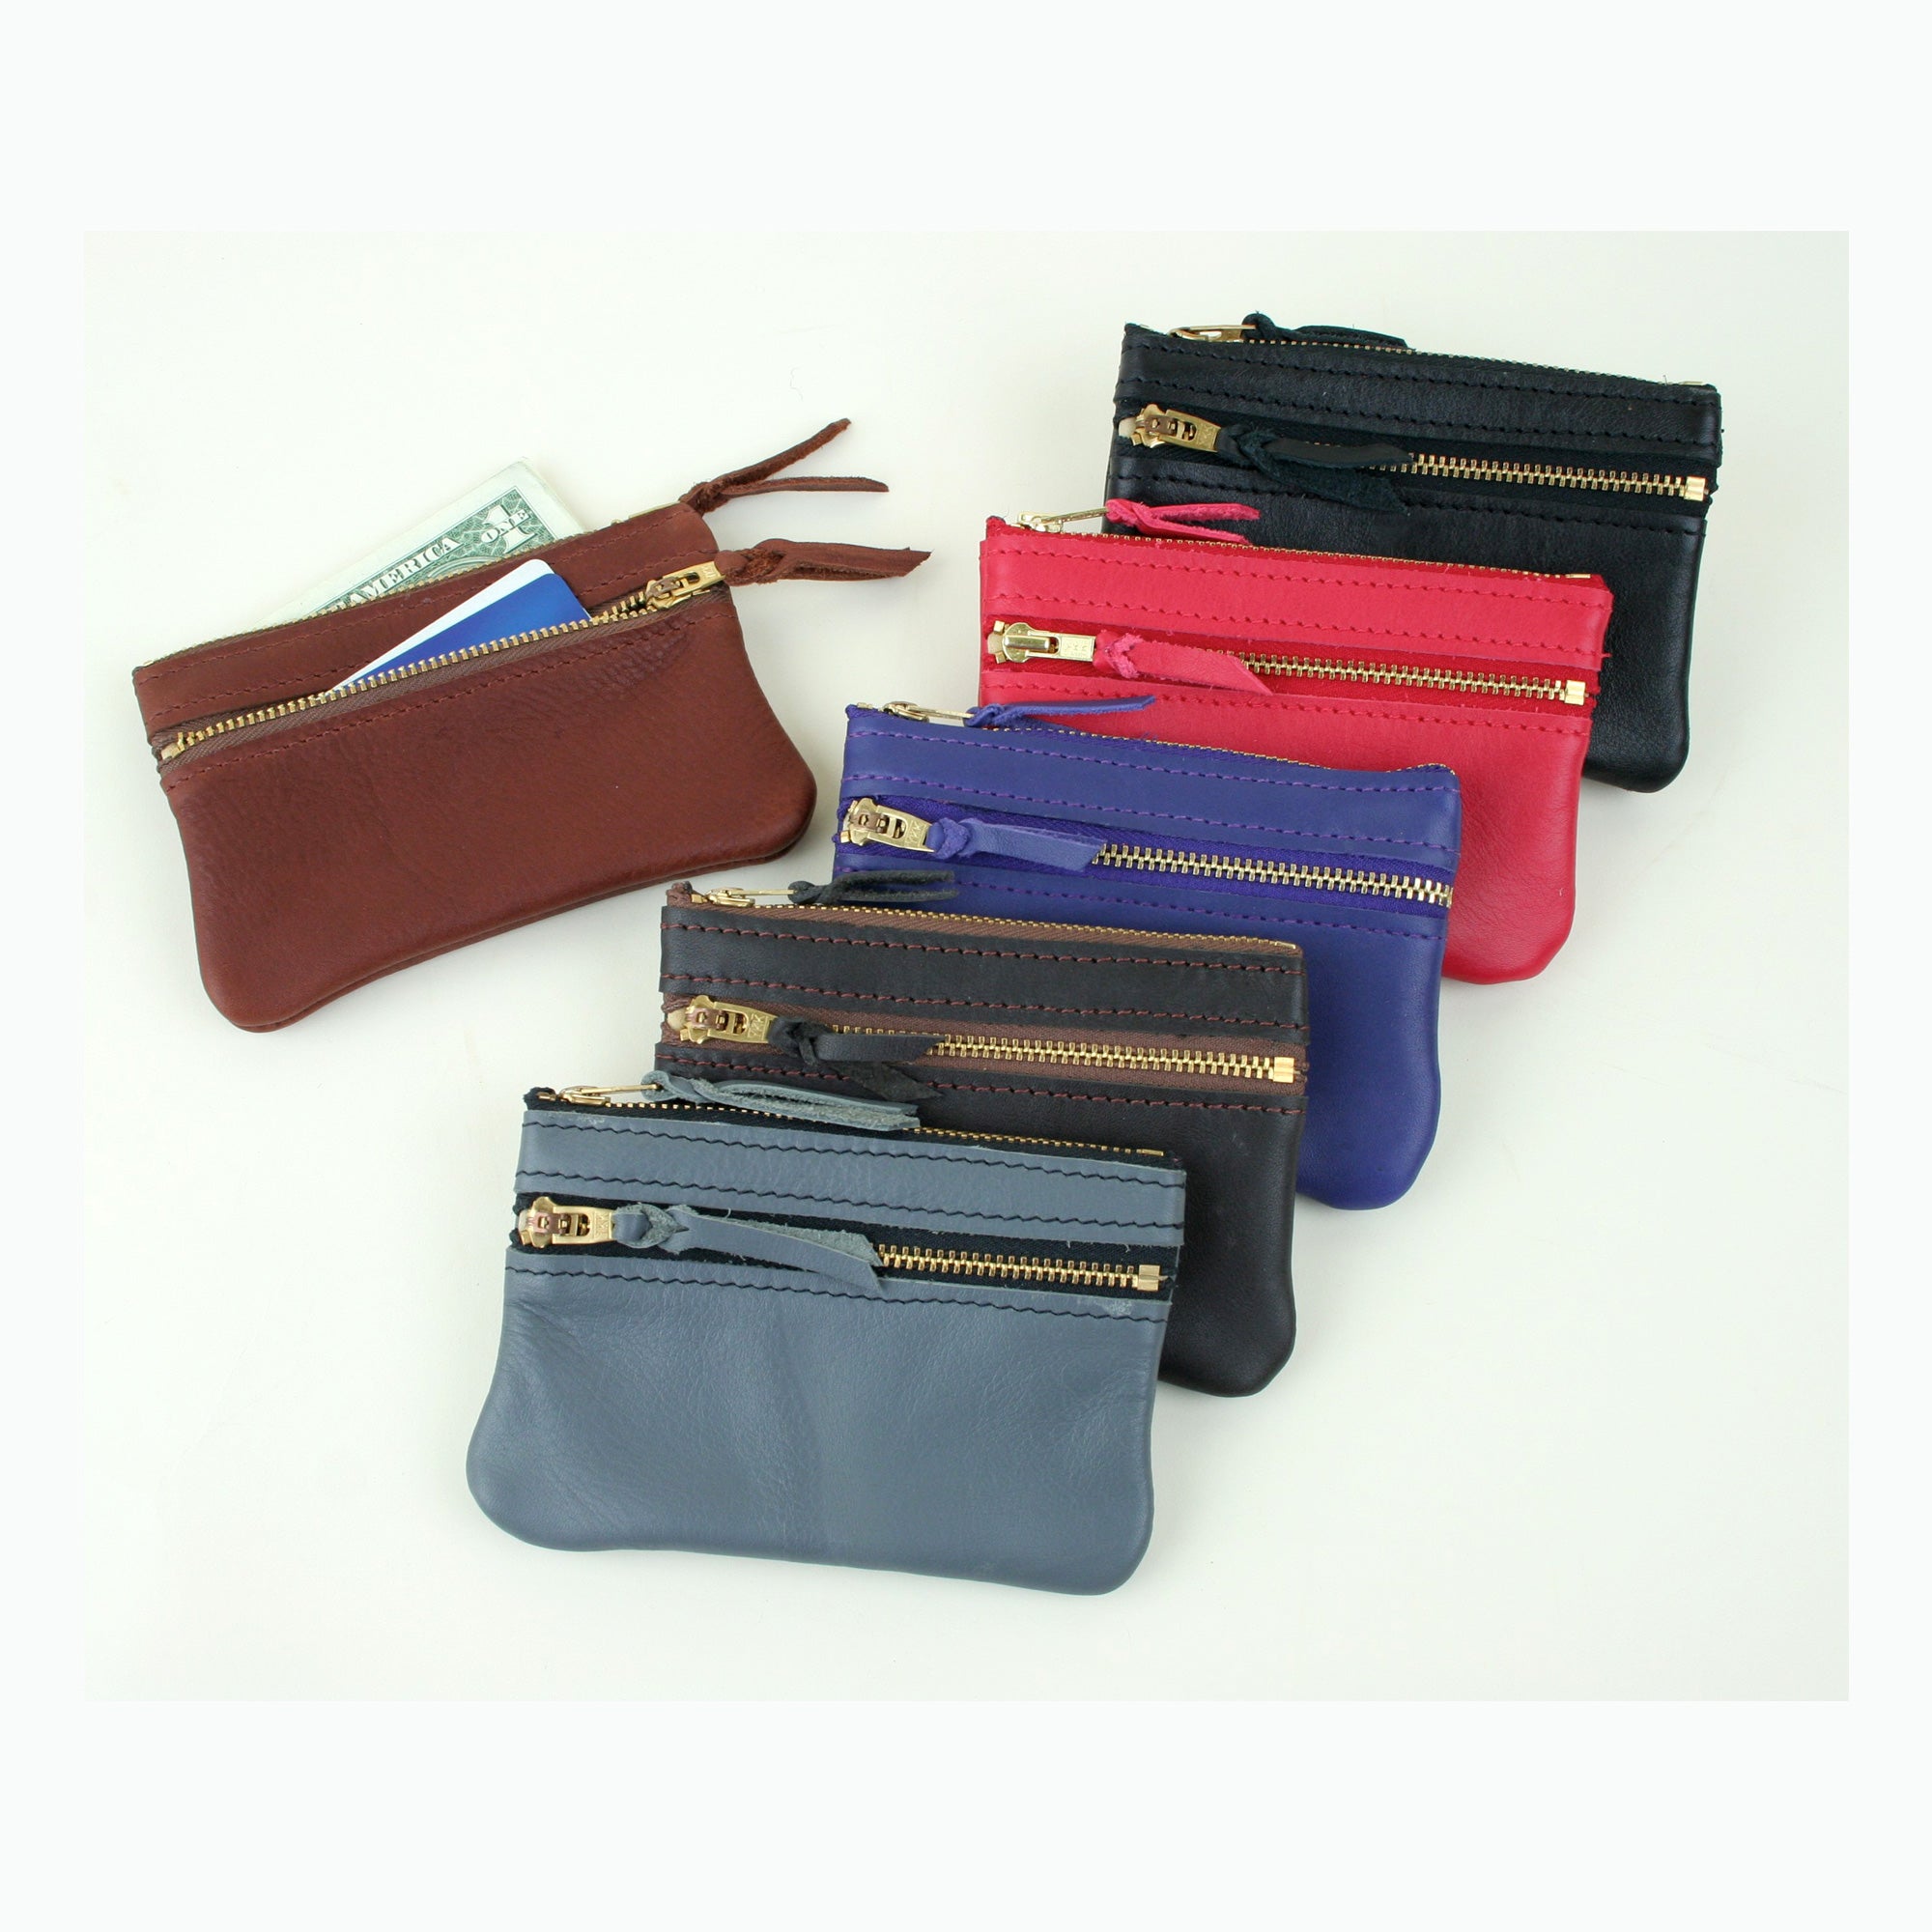 Milano Leather Wallet Pouch Purse Zipper Change Bag | Leather wallet,  Wallet pouch, Pouch